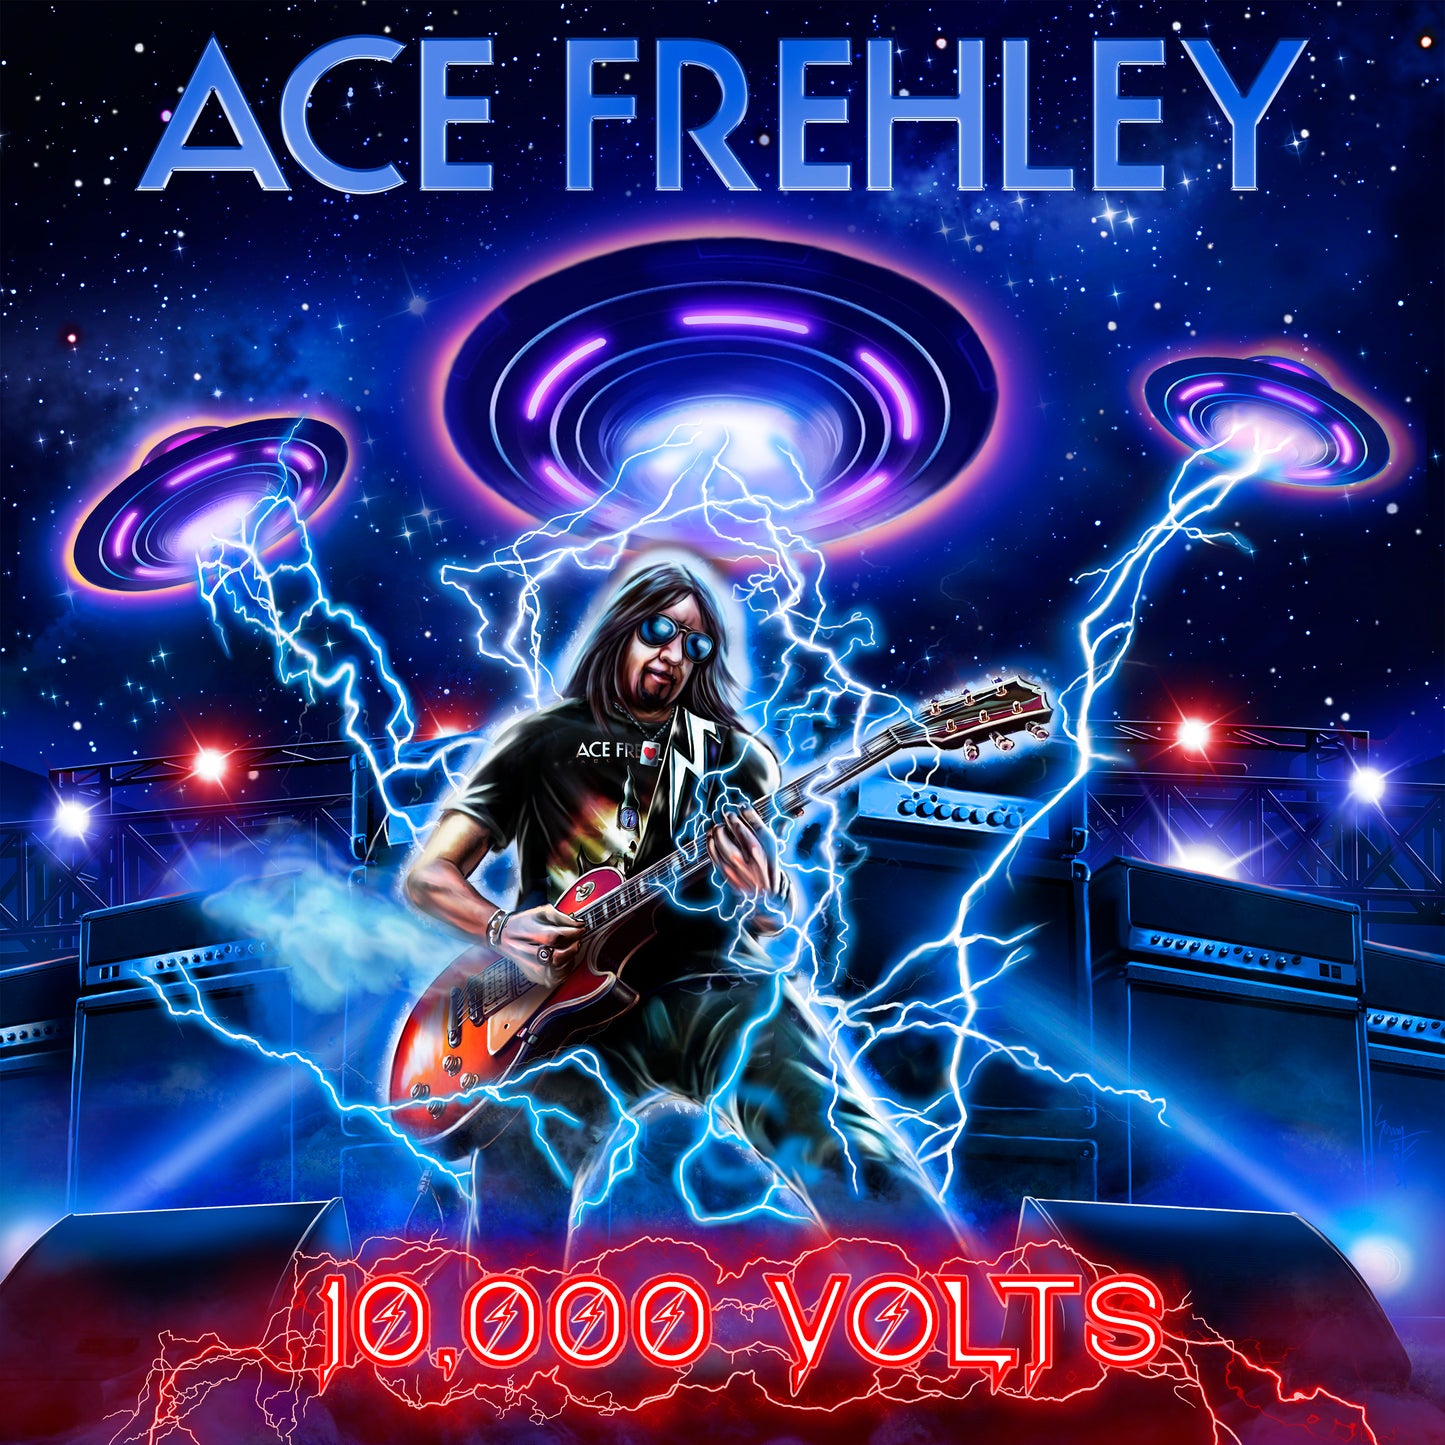 Ace Frehley "10,000 Volts" LP (black vinyl)